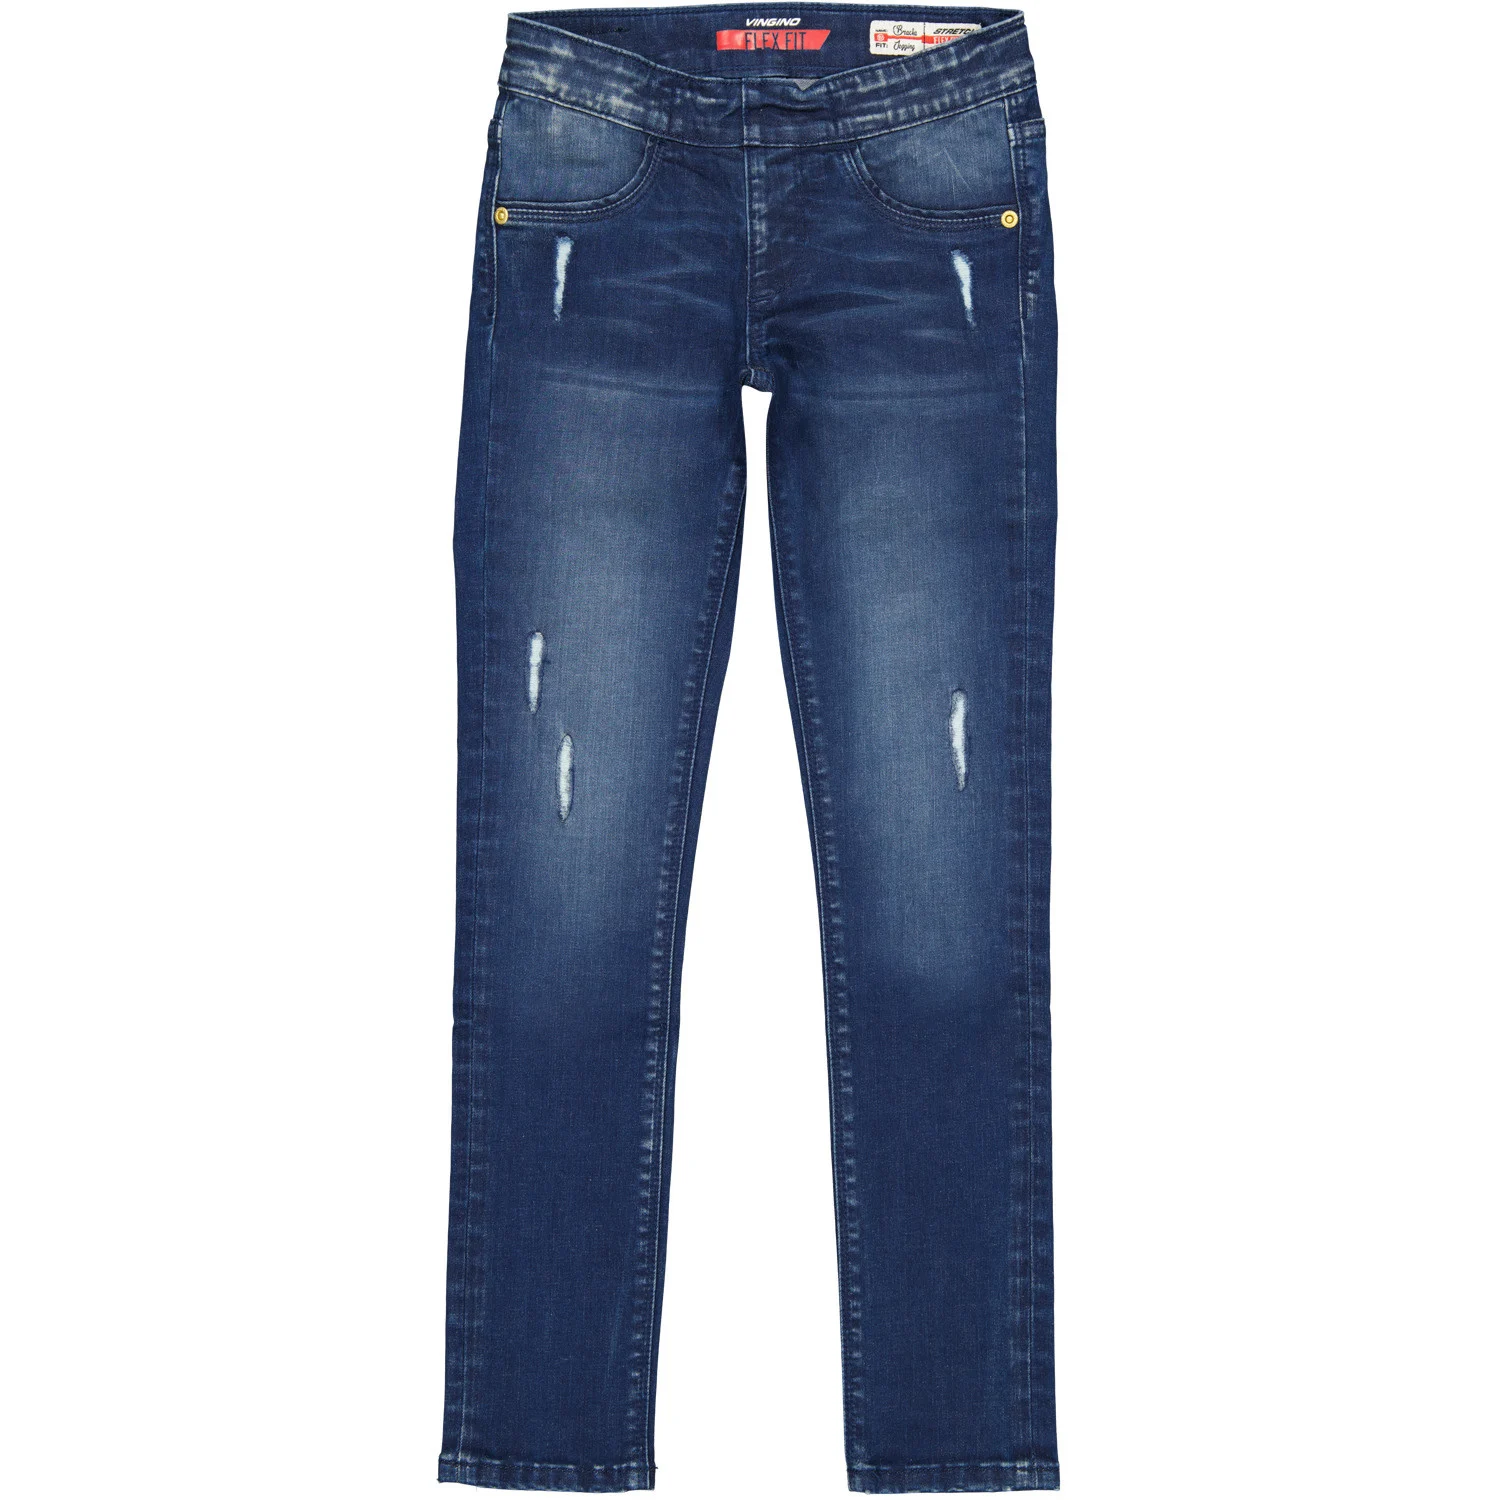 Afbeelding van Vingino Meiden jeans super skinny flex fit bracha dark vintage